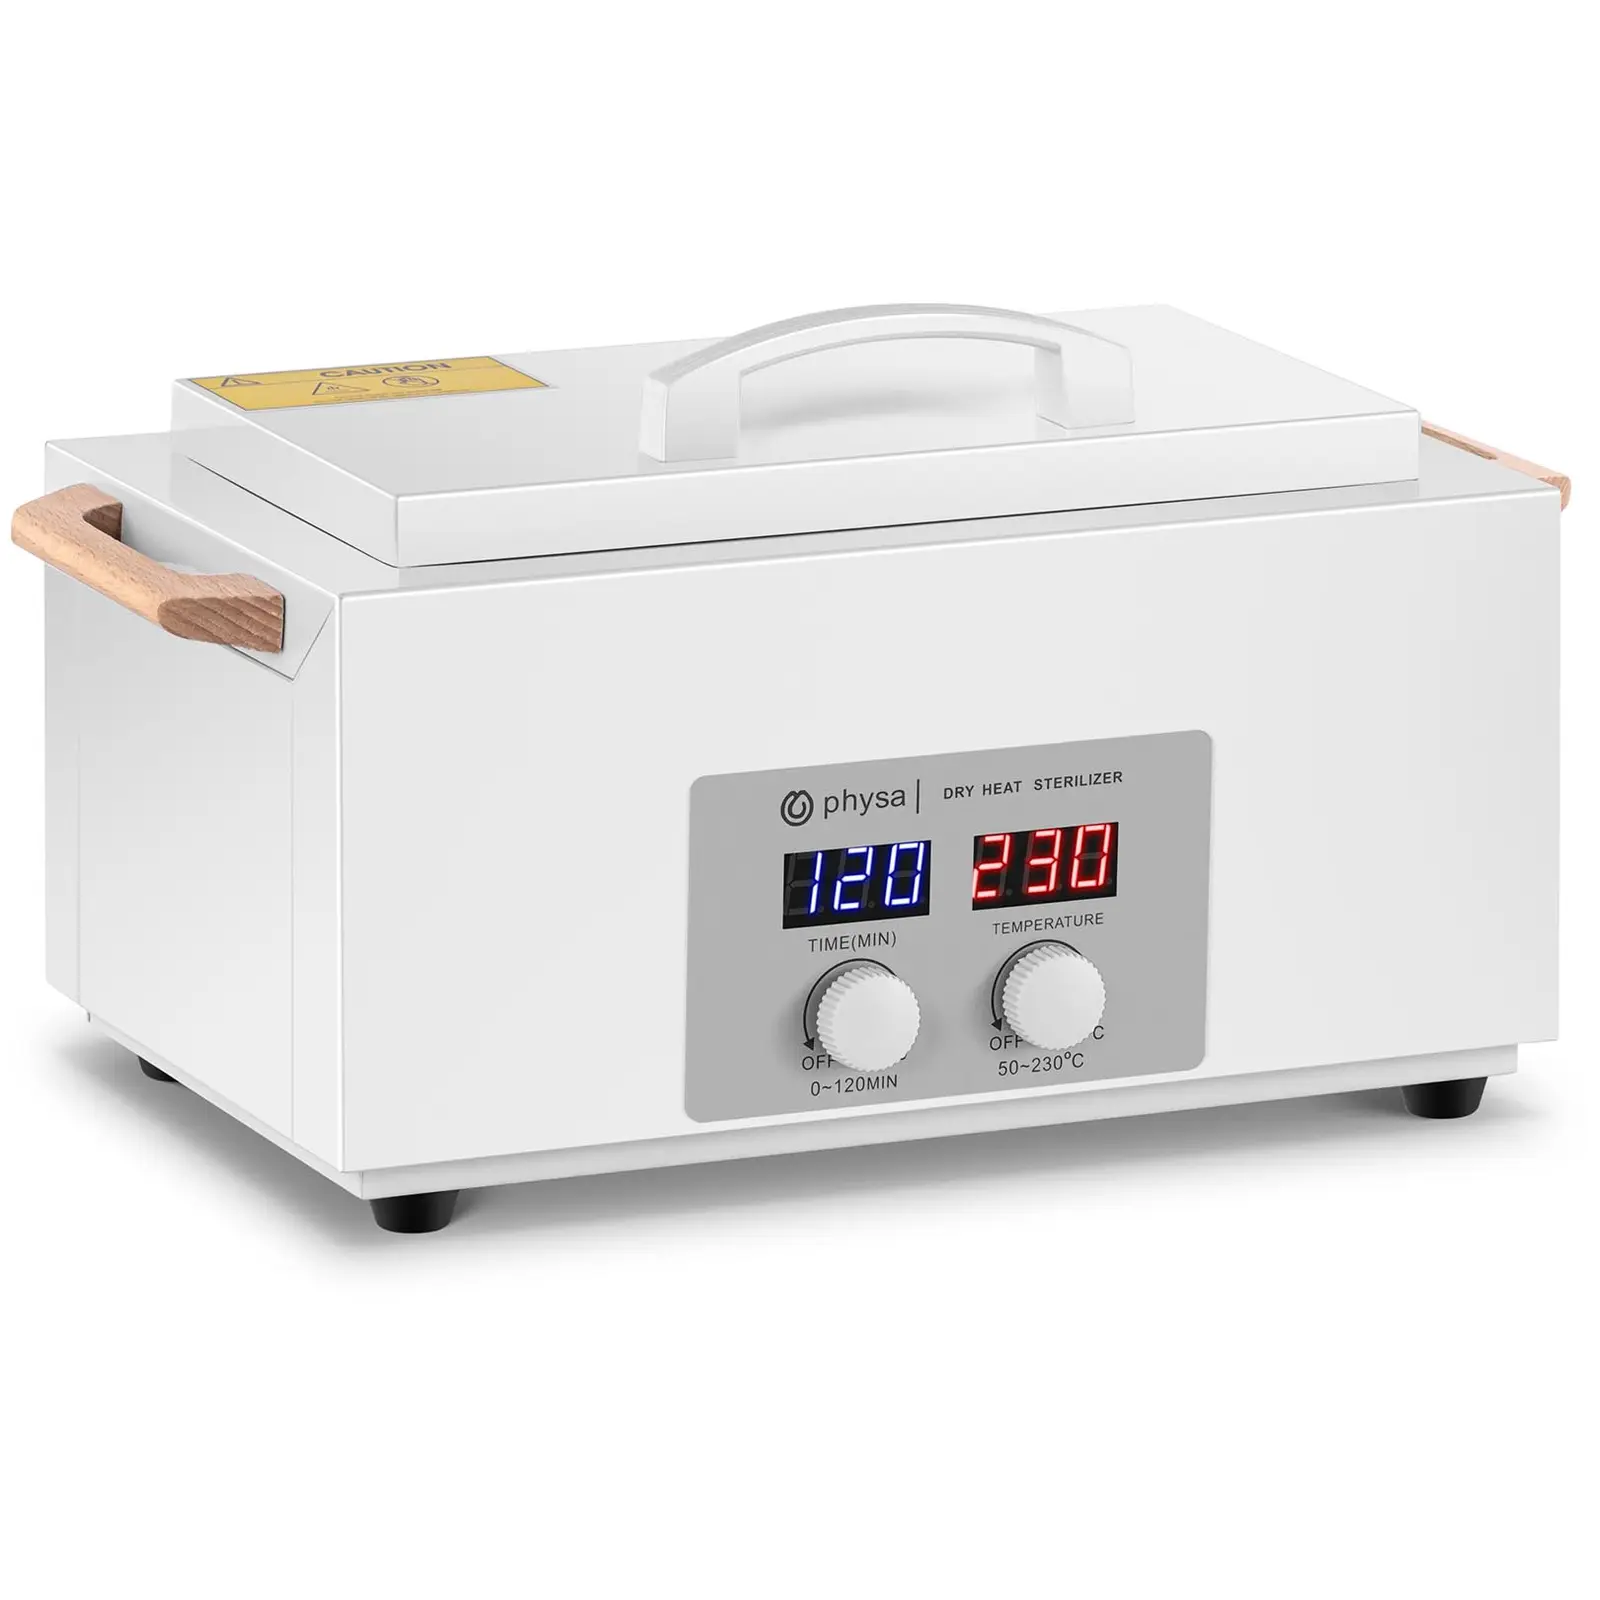 Dry Heat Steriliser - 2 L - timer - 50 to 230 °C